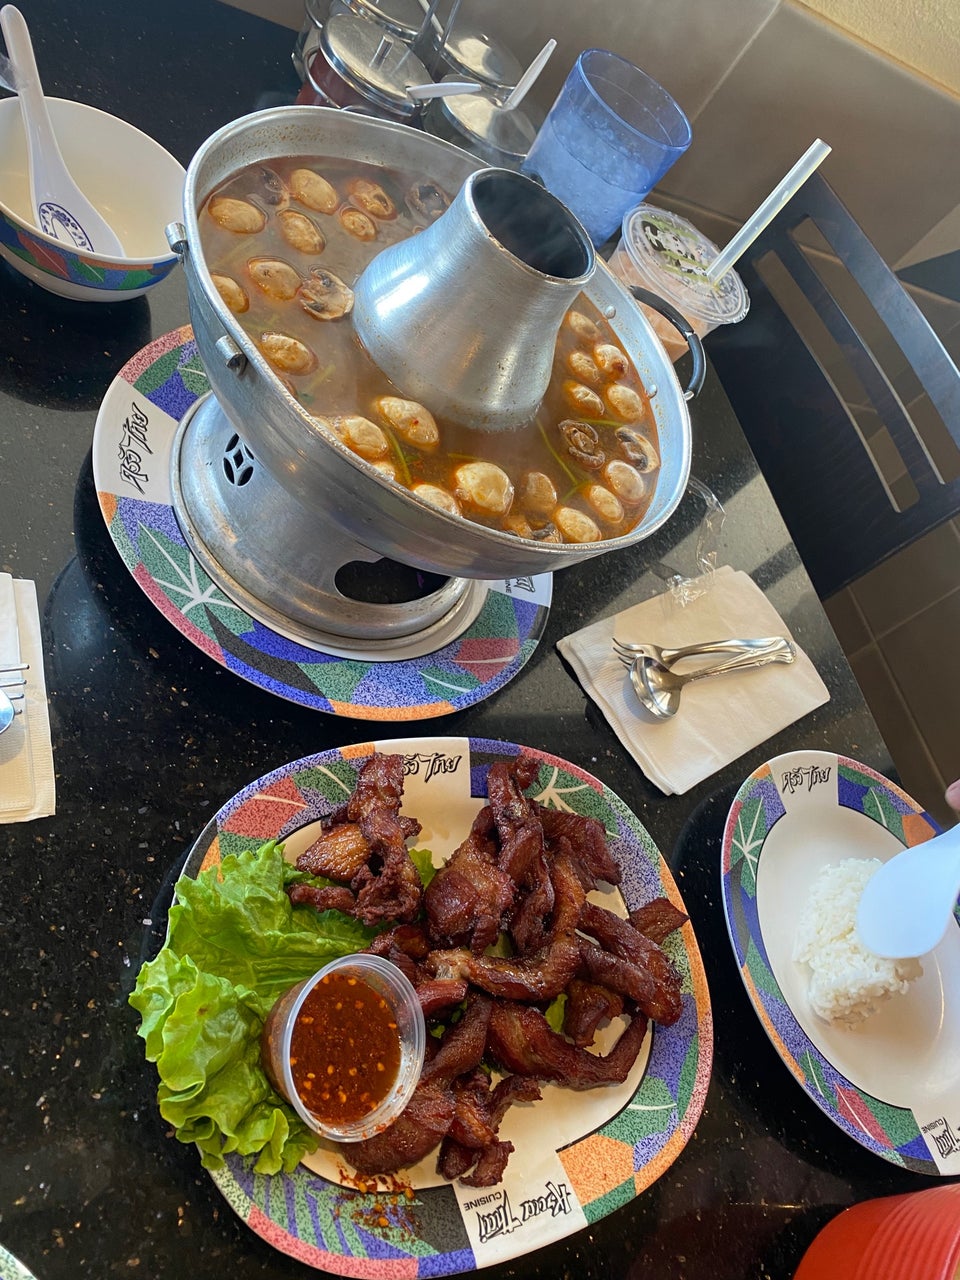 Krua Thai Cuisine